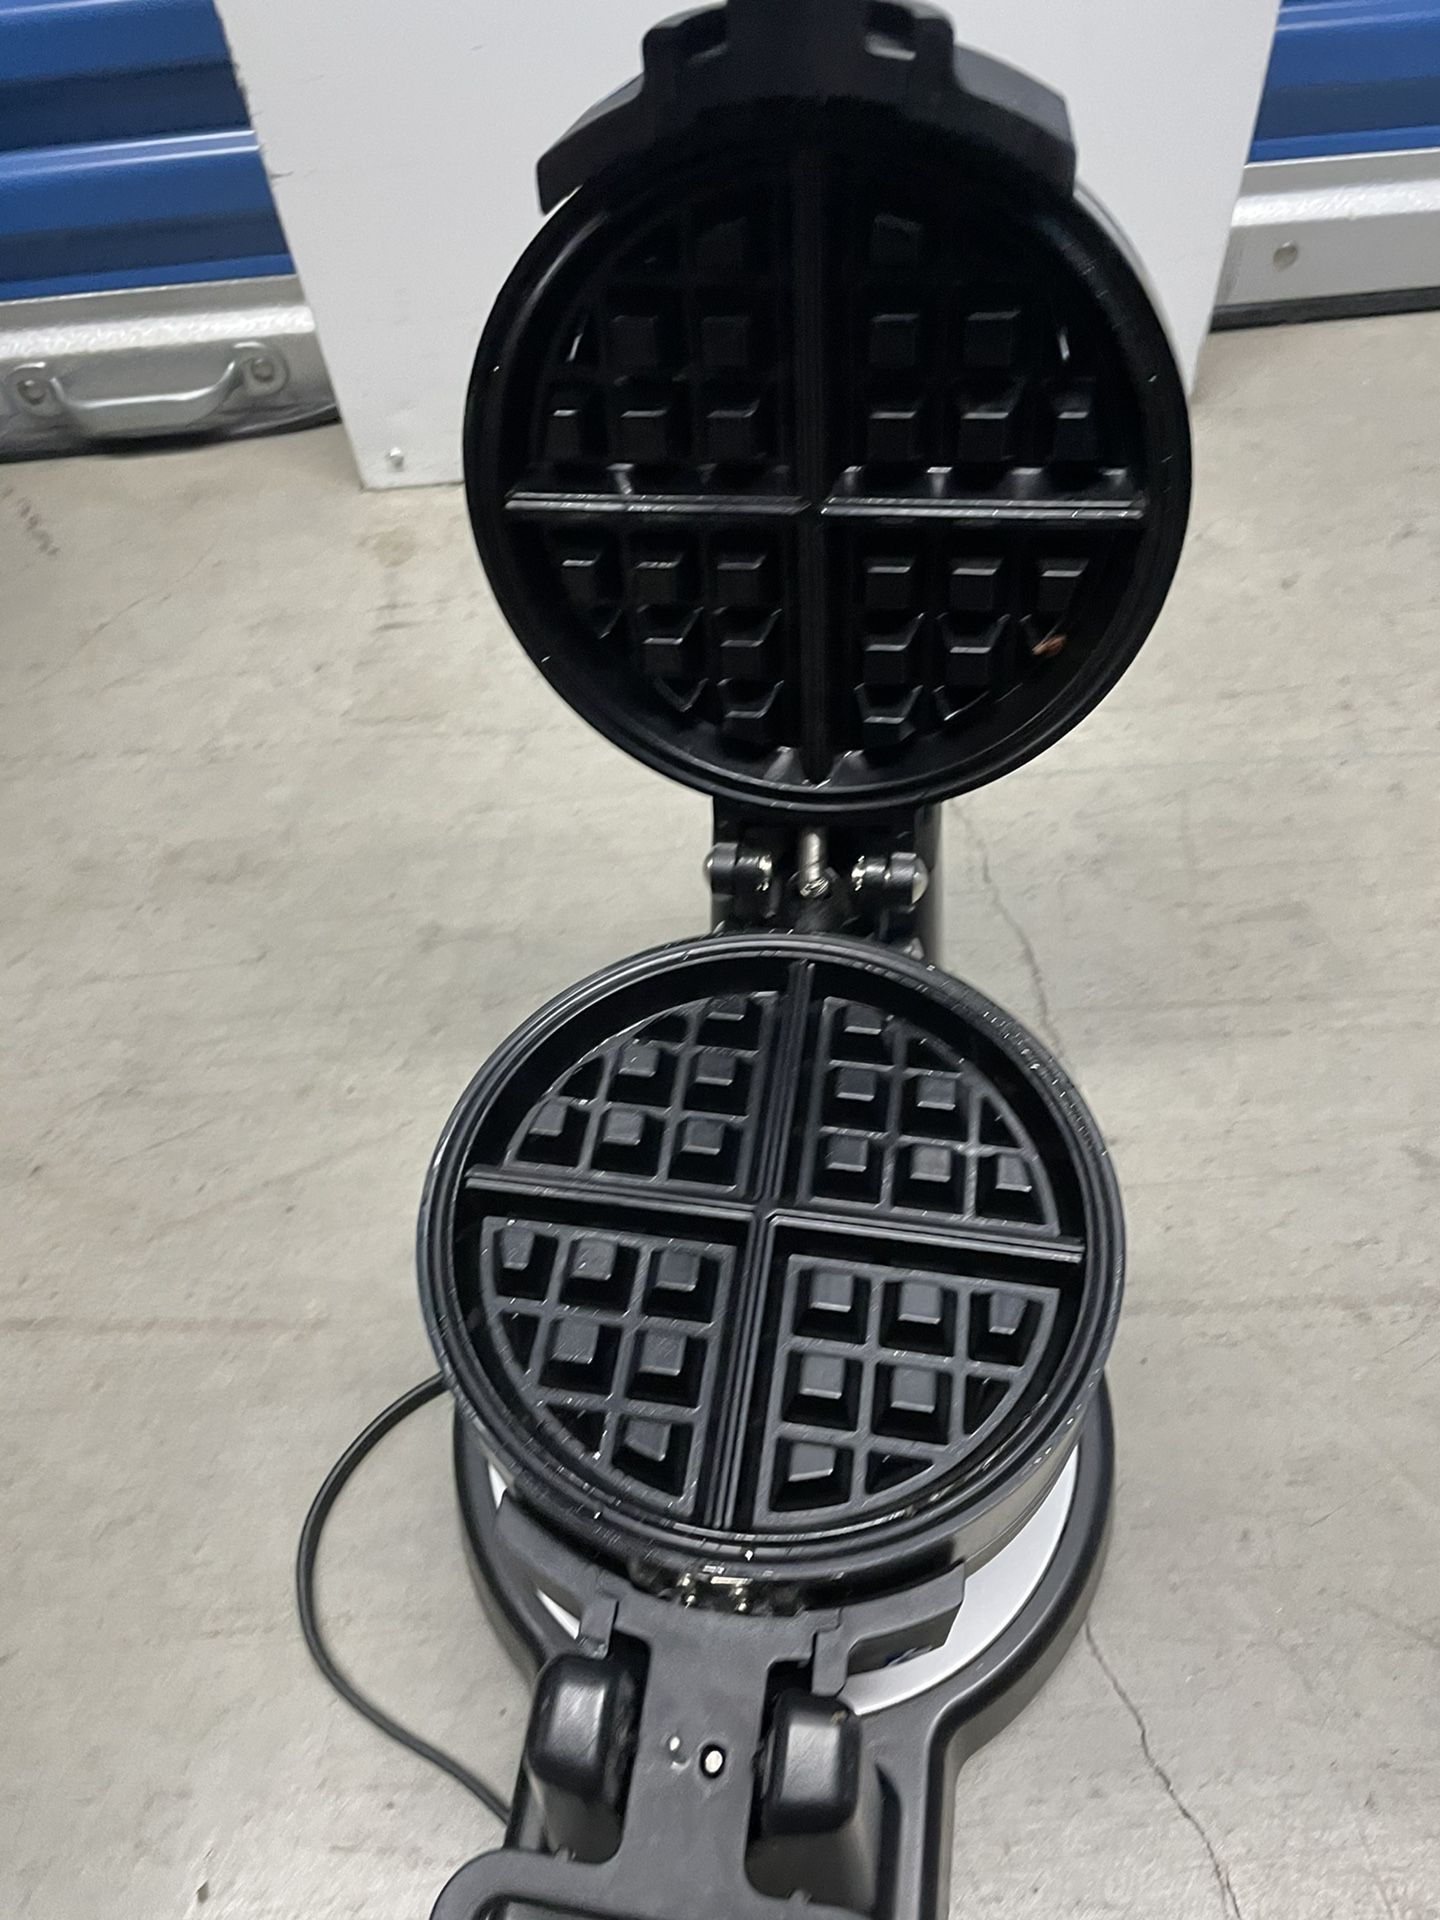 Waring Commercial Double Vertical Belgian Waffle Maker – 120V 1400W